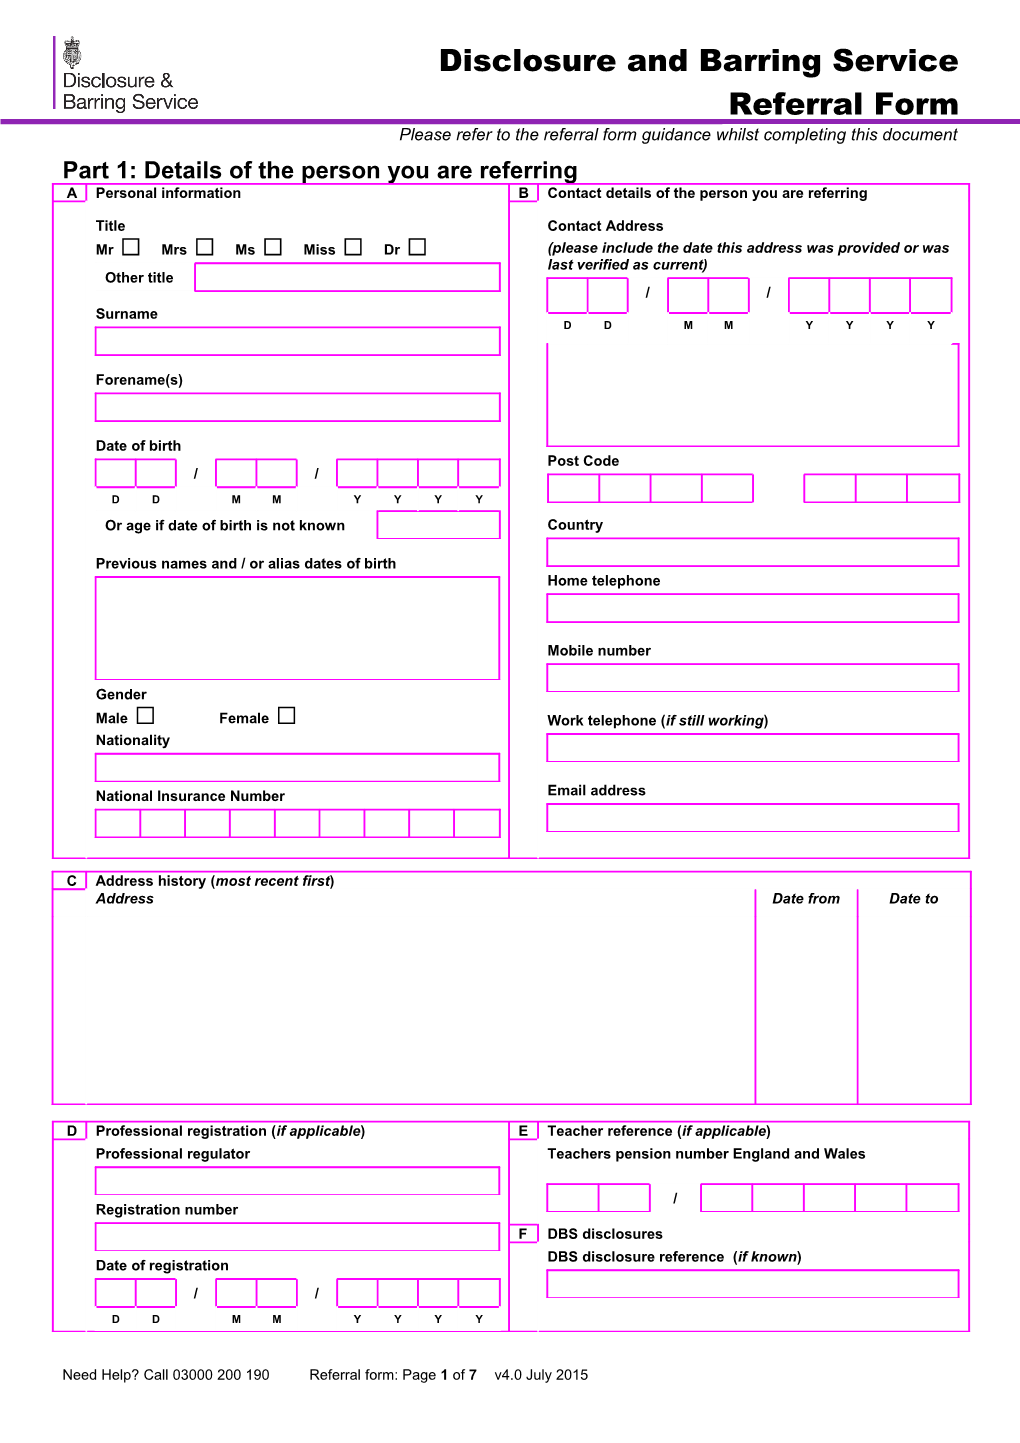 ISA Referral Form Version 2